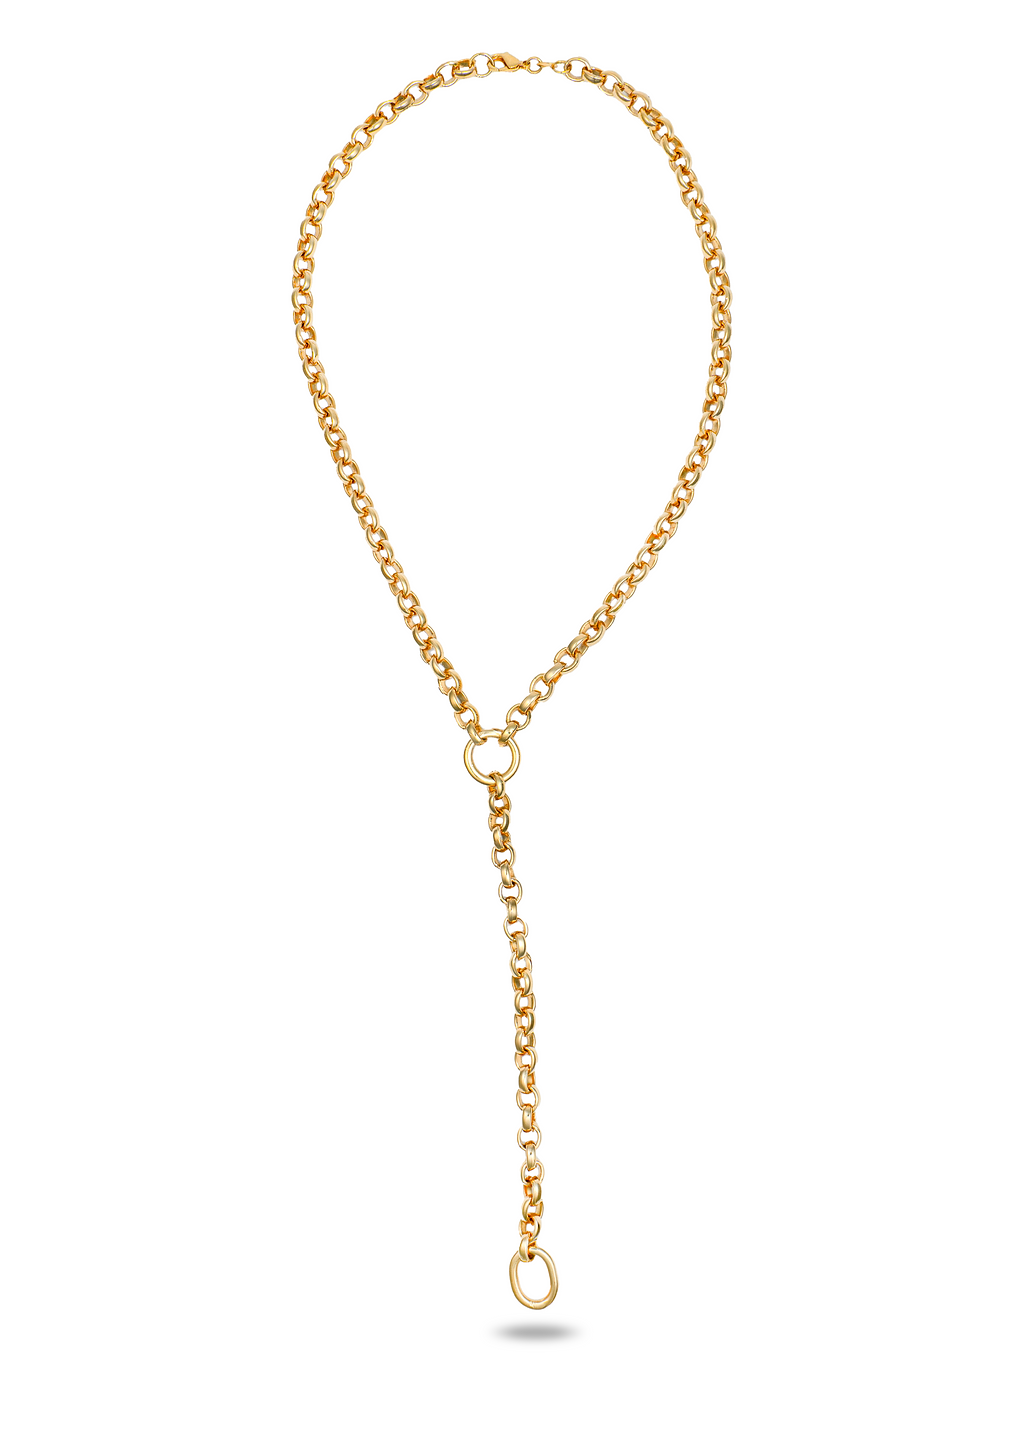 Rolo Bracelet & Necklace (H115)